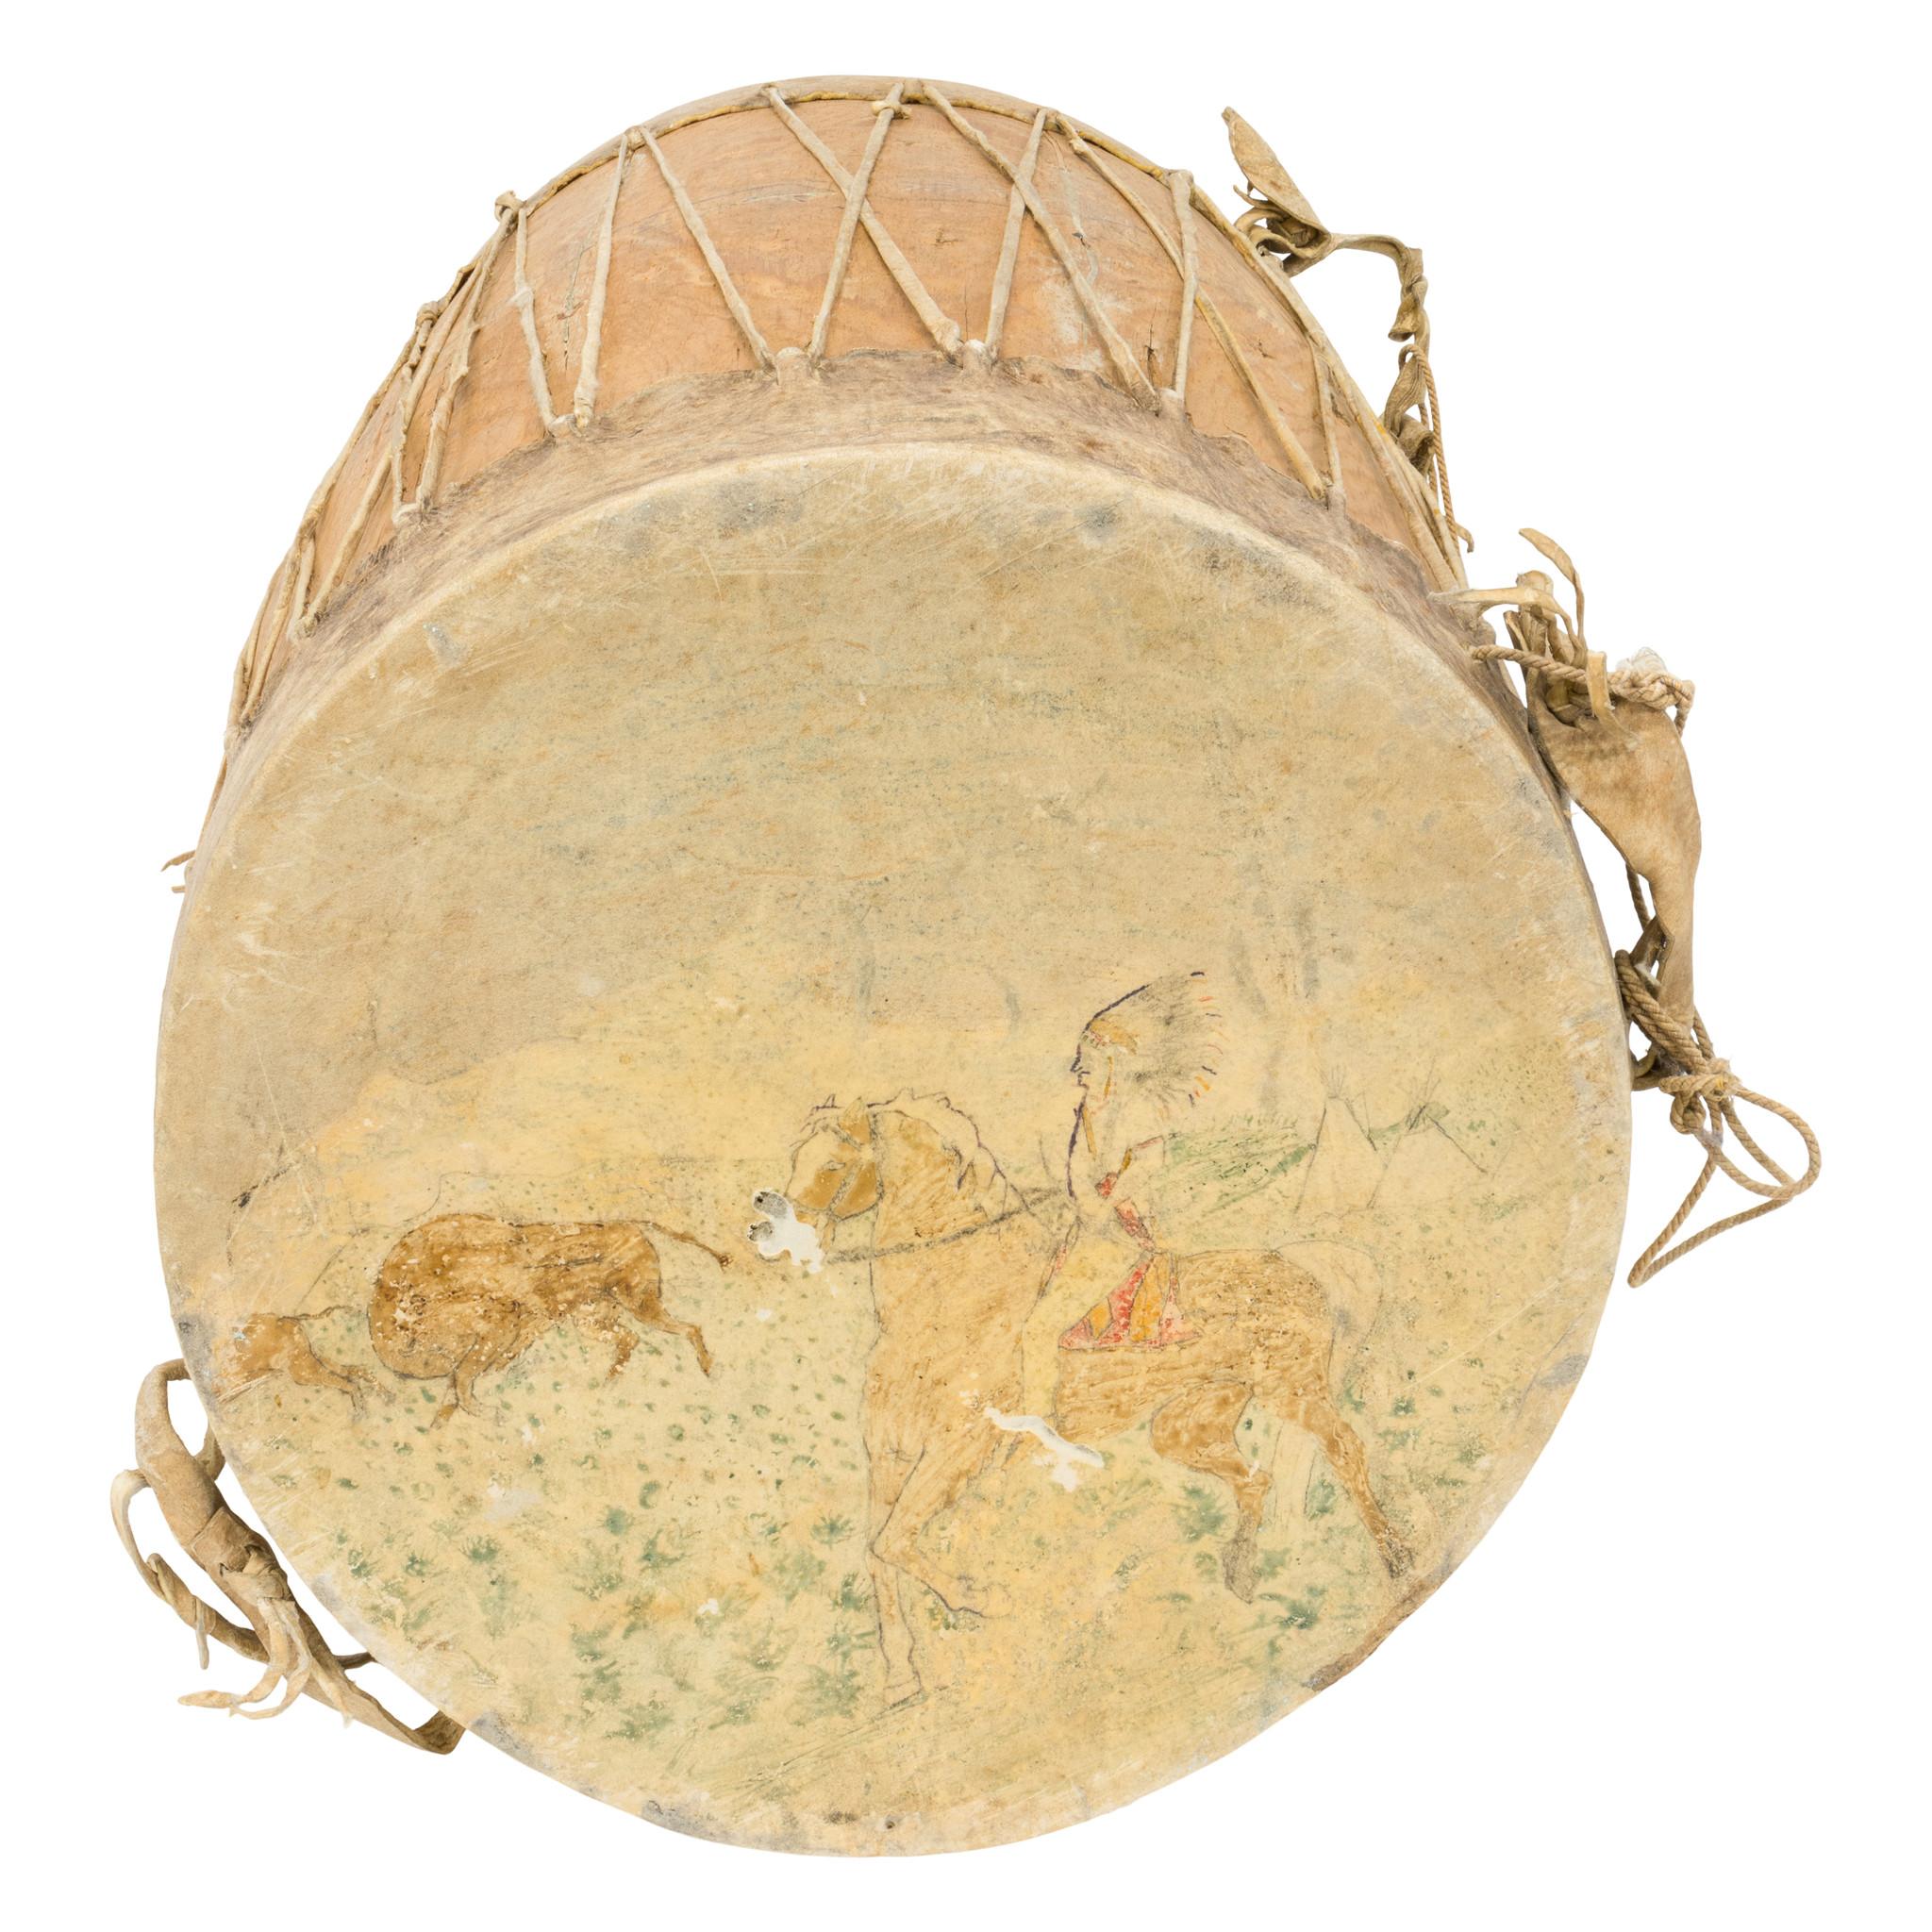 Native American Pueblo Pictorial Drum In Good Condition For Sale In Coeur d'Alene, ID